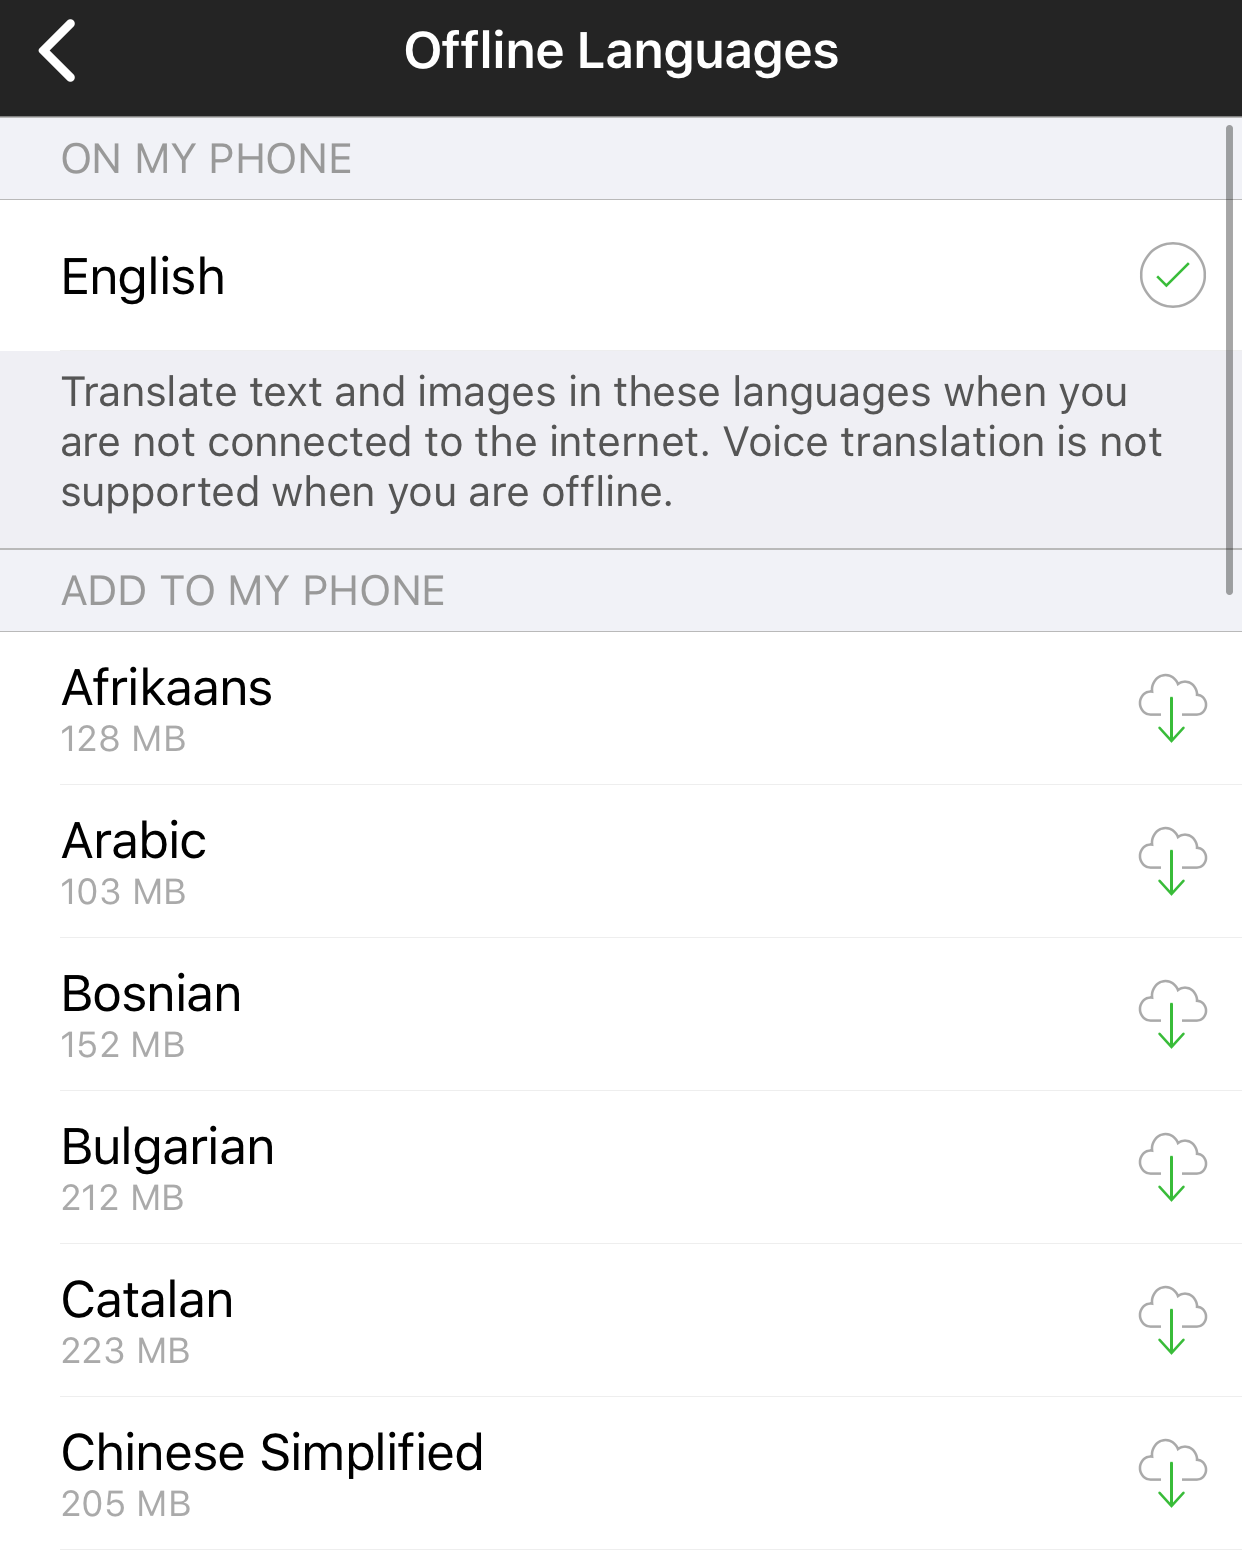 How To Use Microsoft Translator’s Enhanced Offline Languages